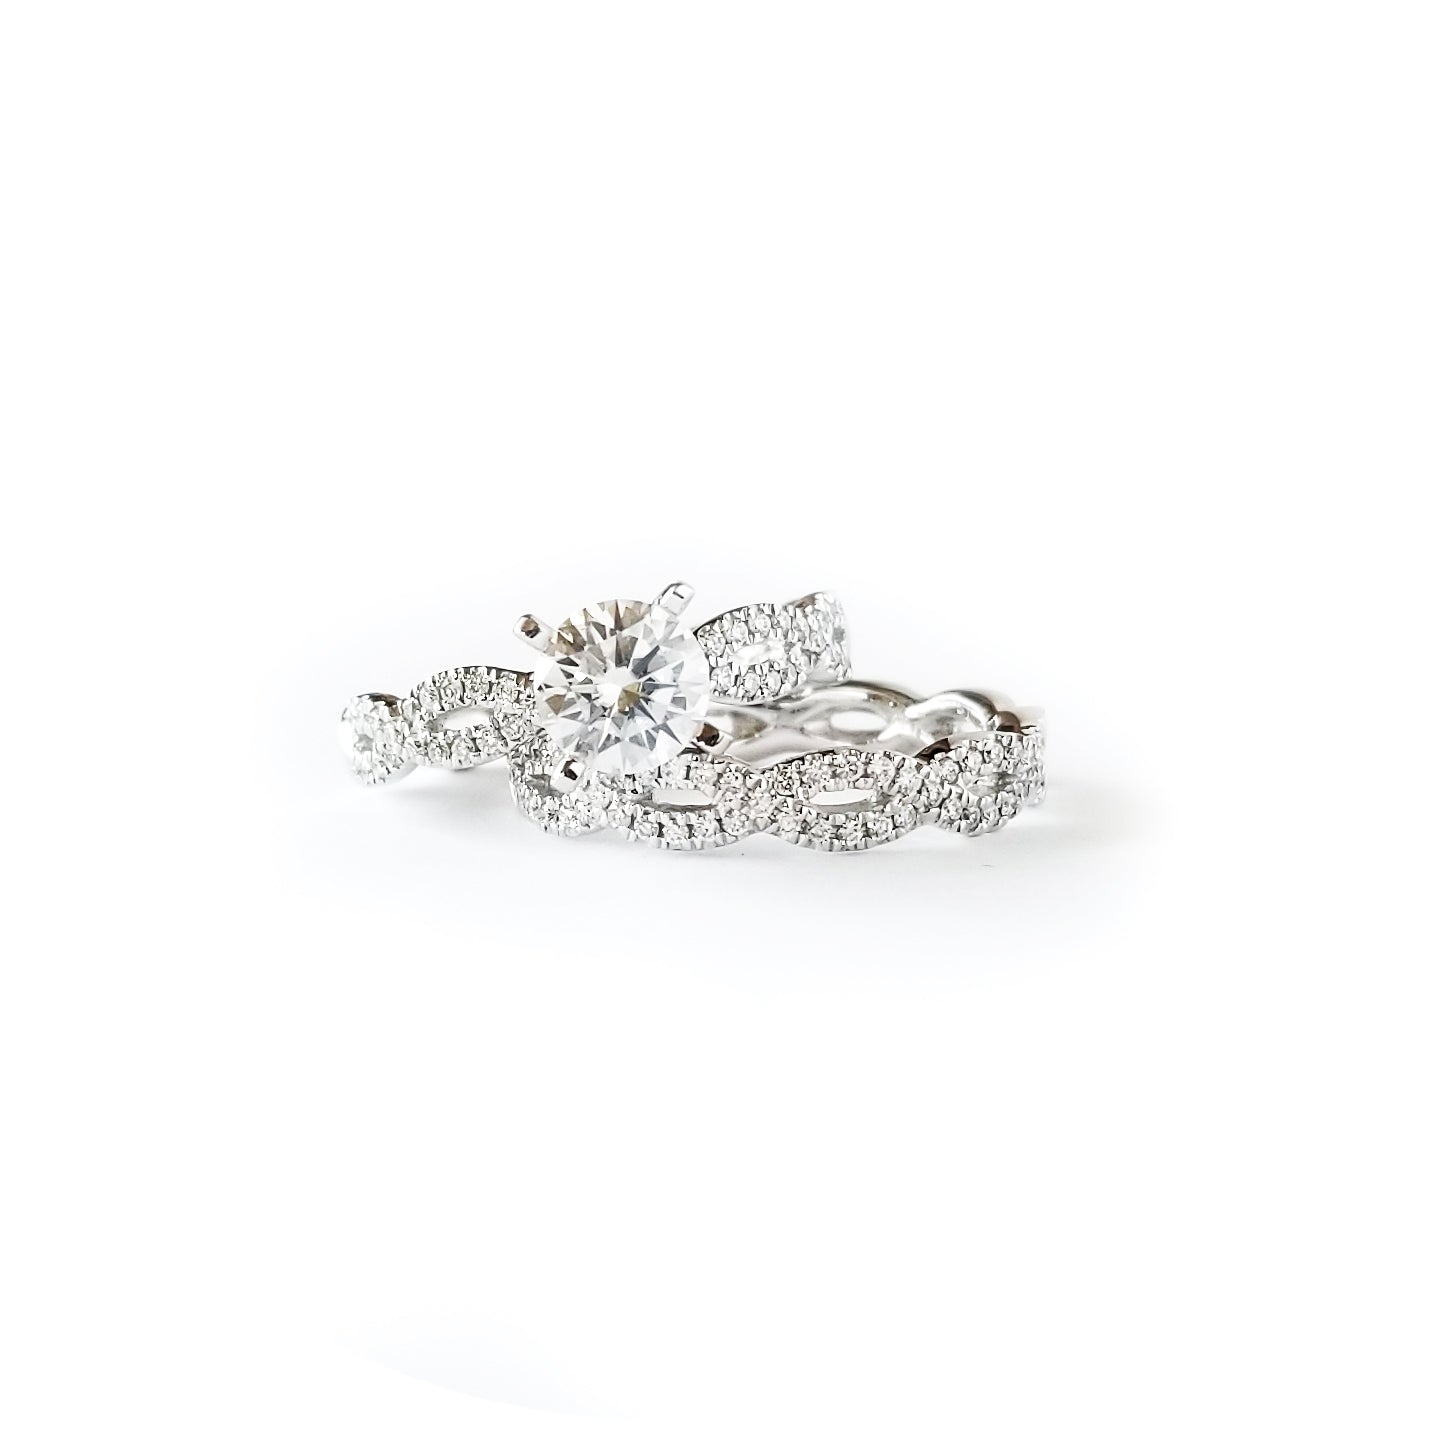 18K White Gold Diamond Engagement Ring Set